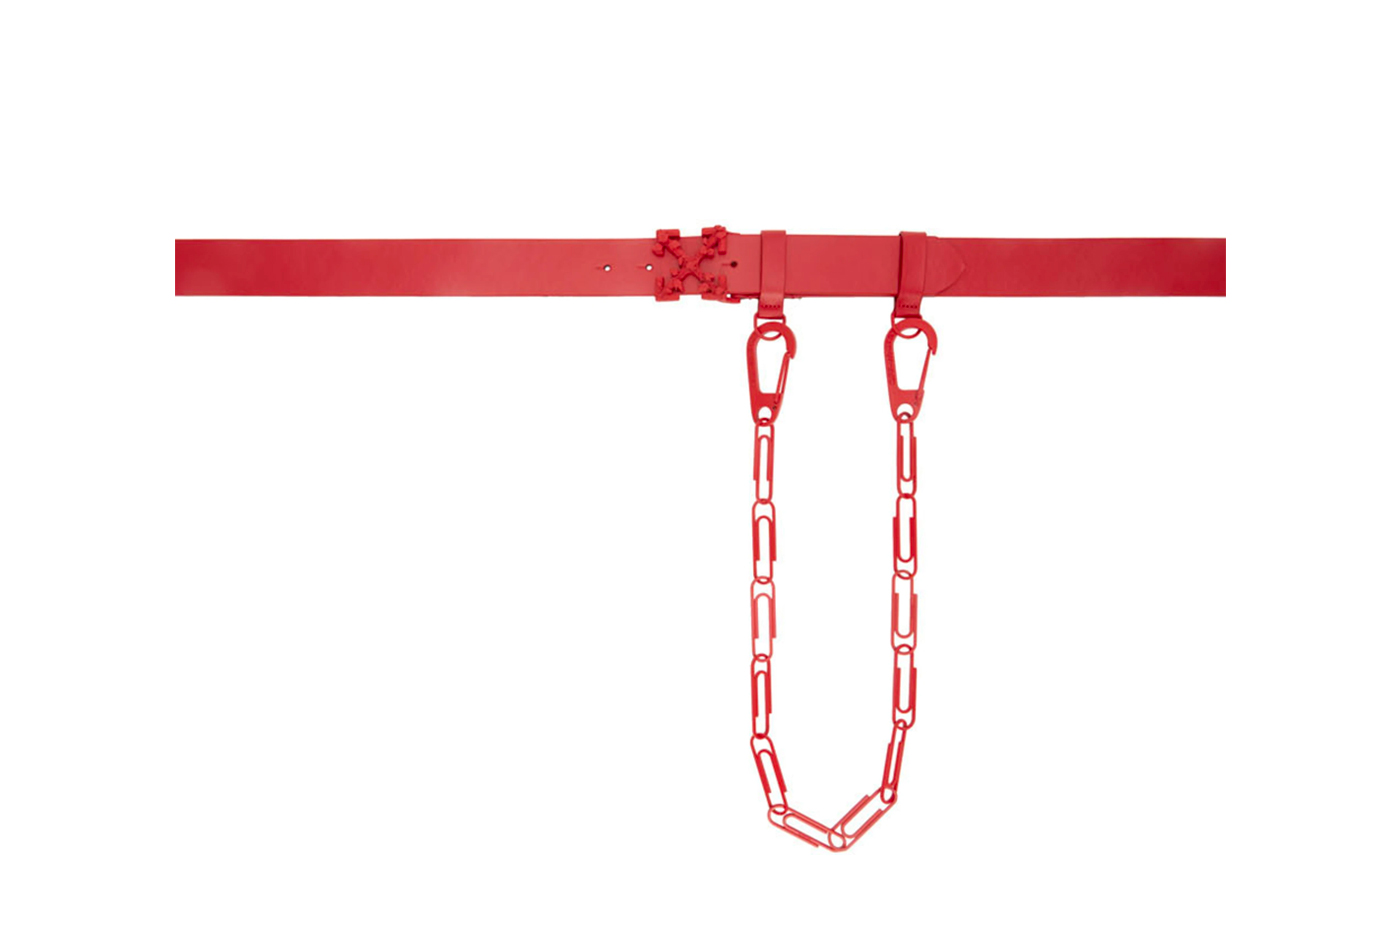 alias sommerfugl Øde Off-White™ Red Leather Chain Belt Release 2020 | Drops | HYPEBEAST